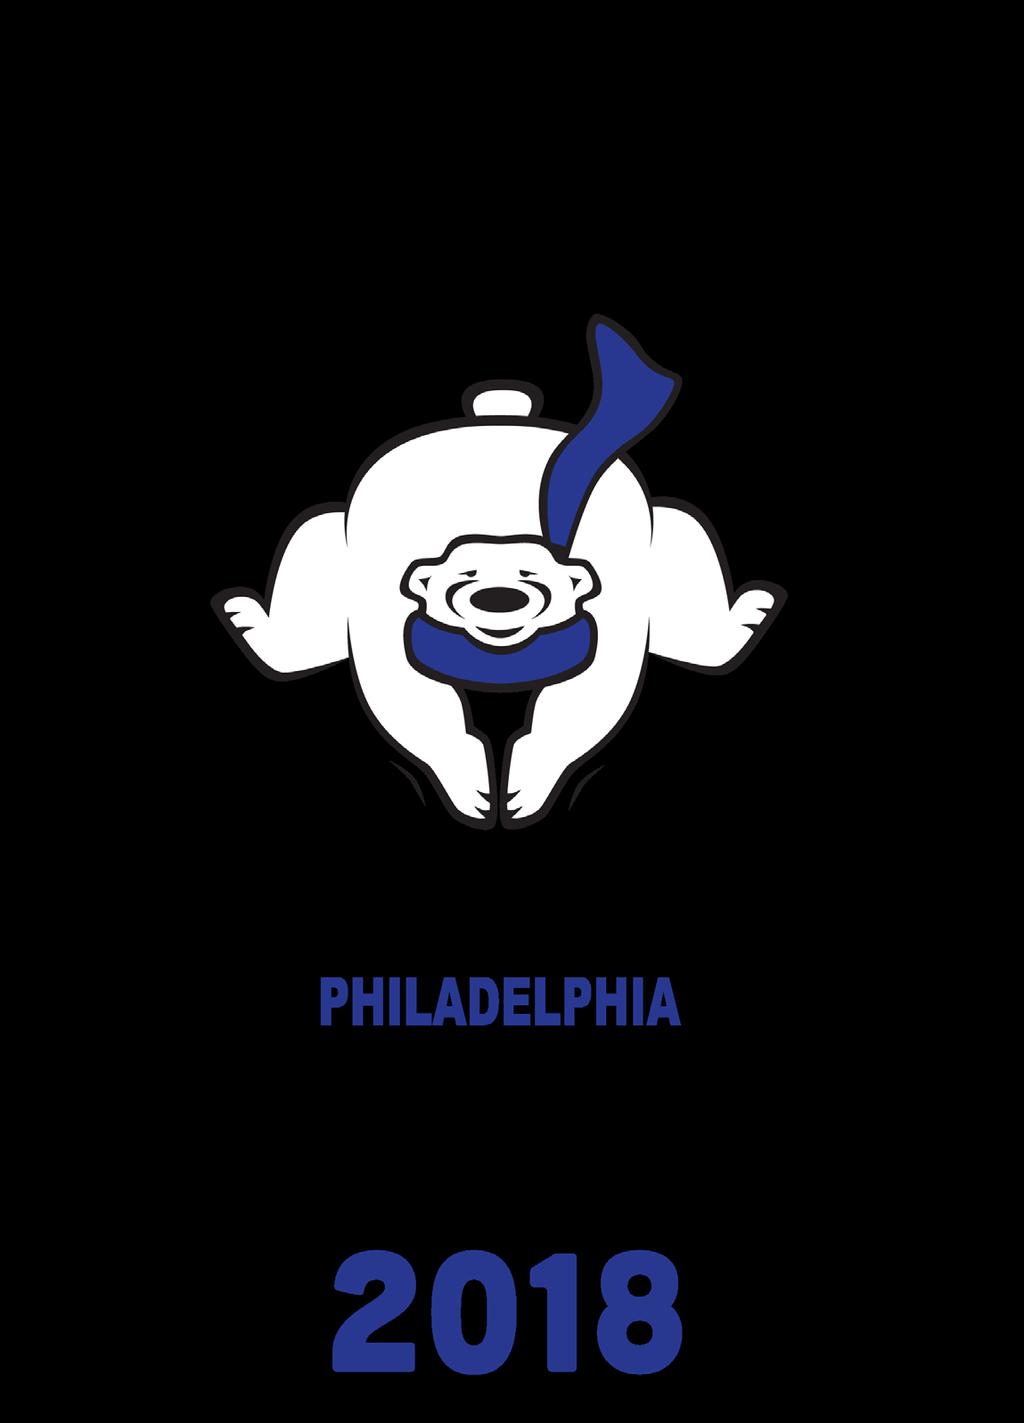 Drexel University Friday, November 30 The Philadelphia Polar Plunge is an event to raise funds and awareness for Special Olympics Pennsylvania s Philadelphia local program (SOPA-Philadelphia).